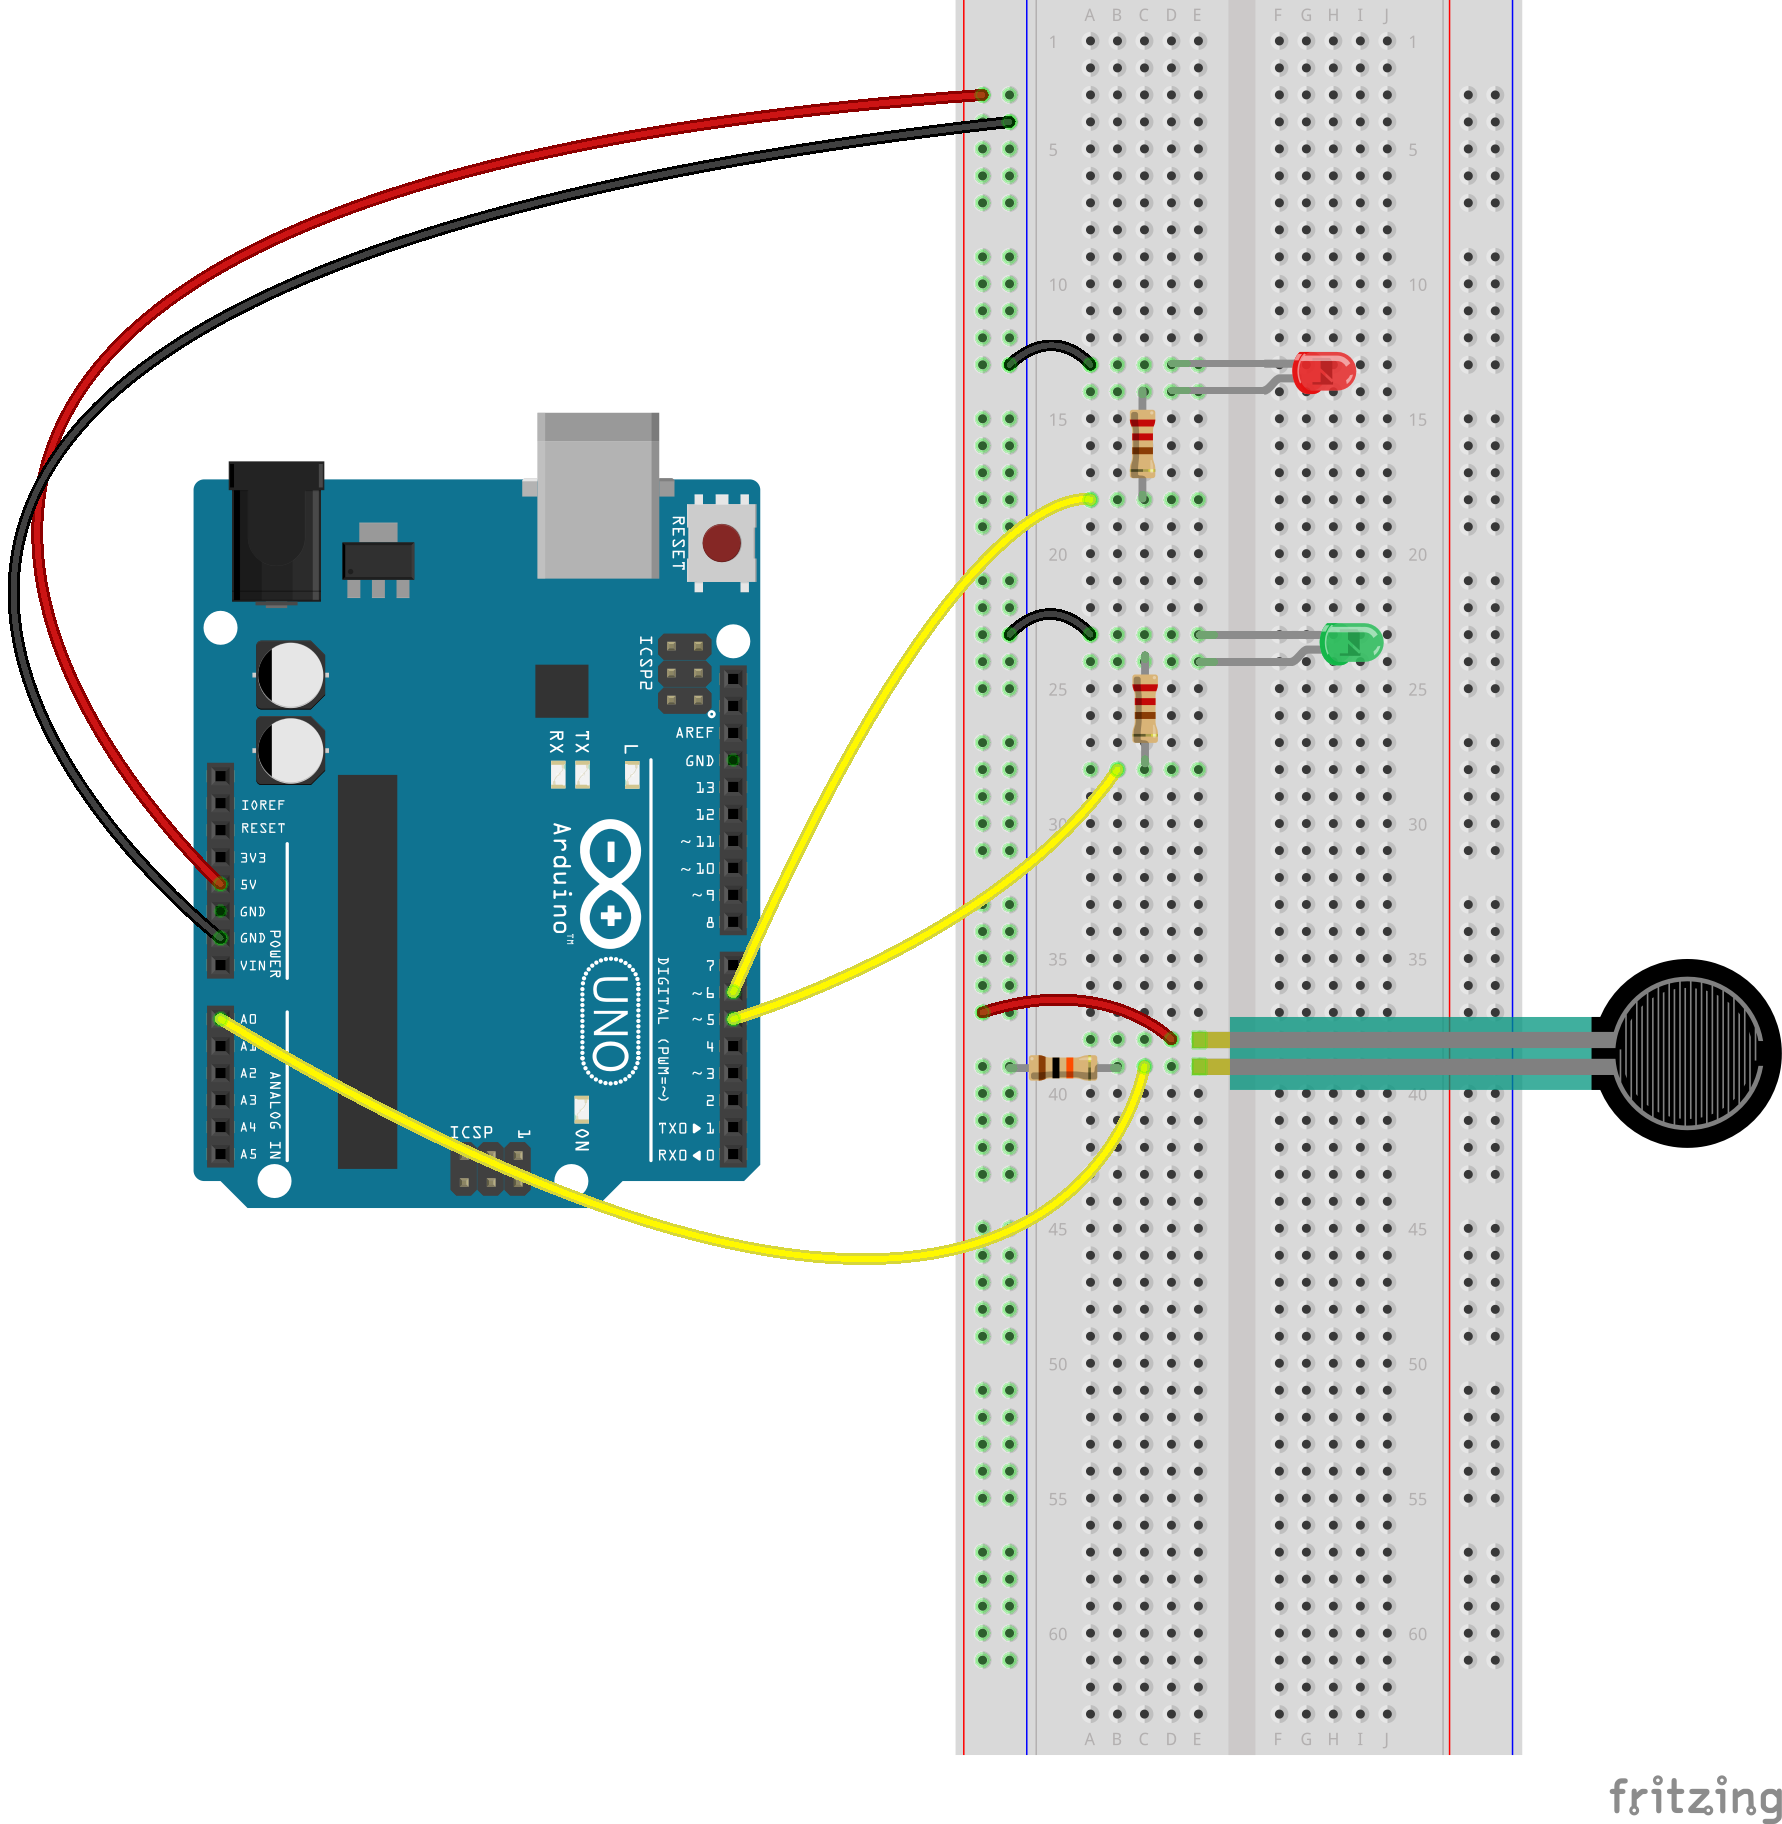 Breadboard diagram of a force sensor controlling 2 LEDs